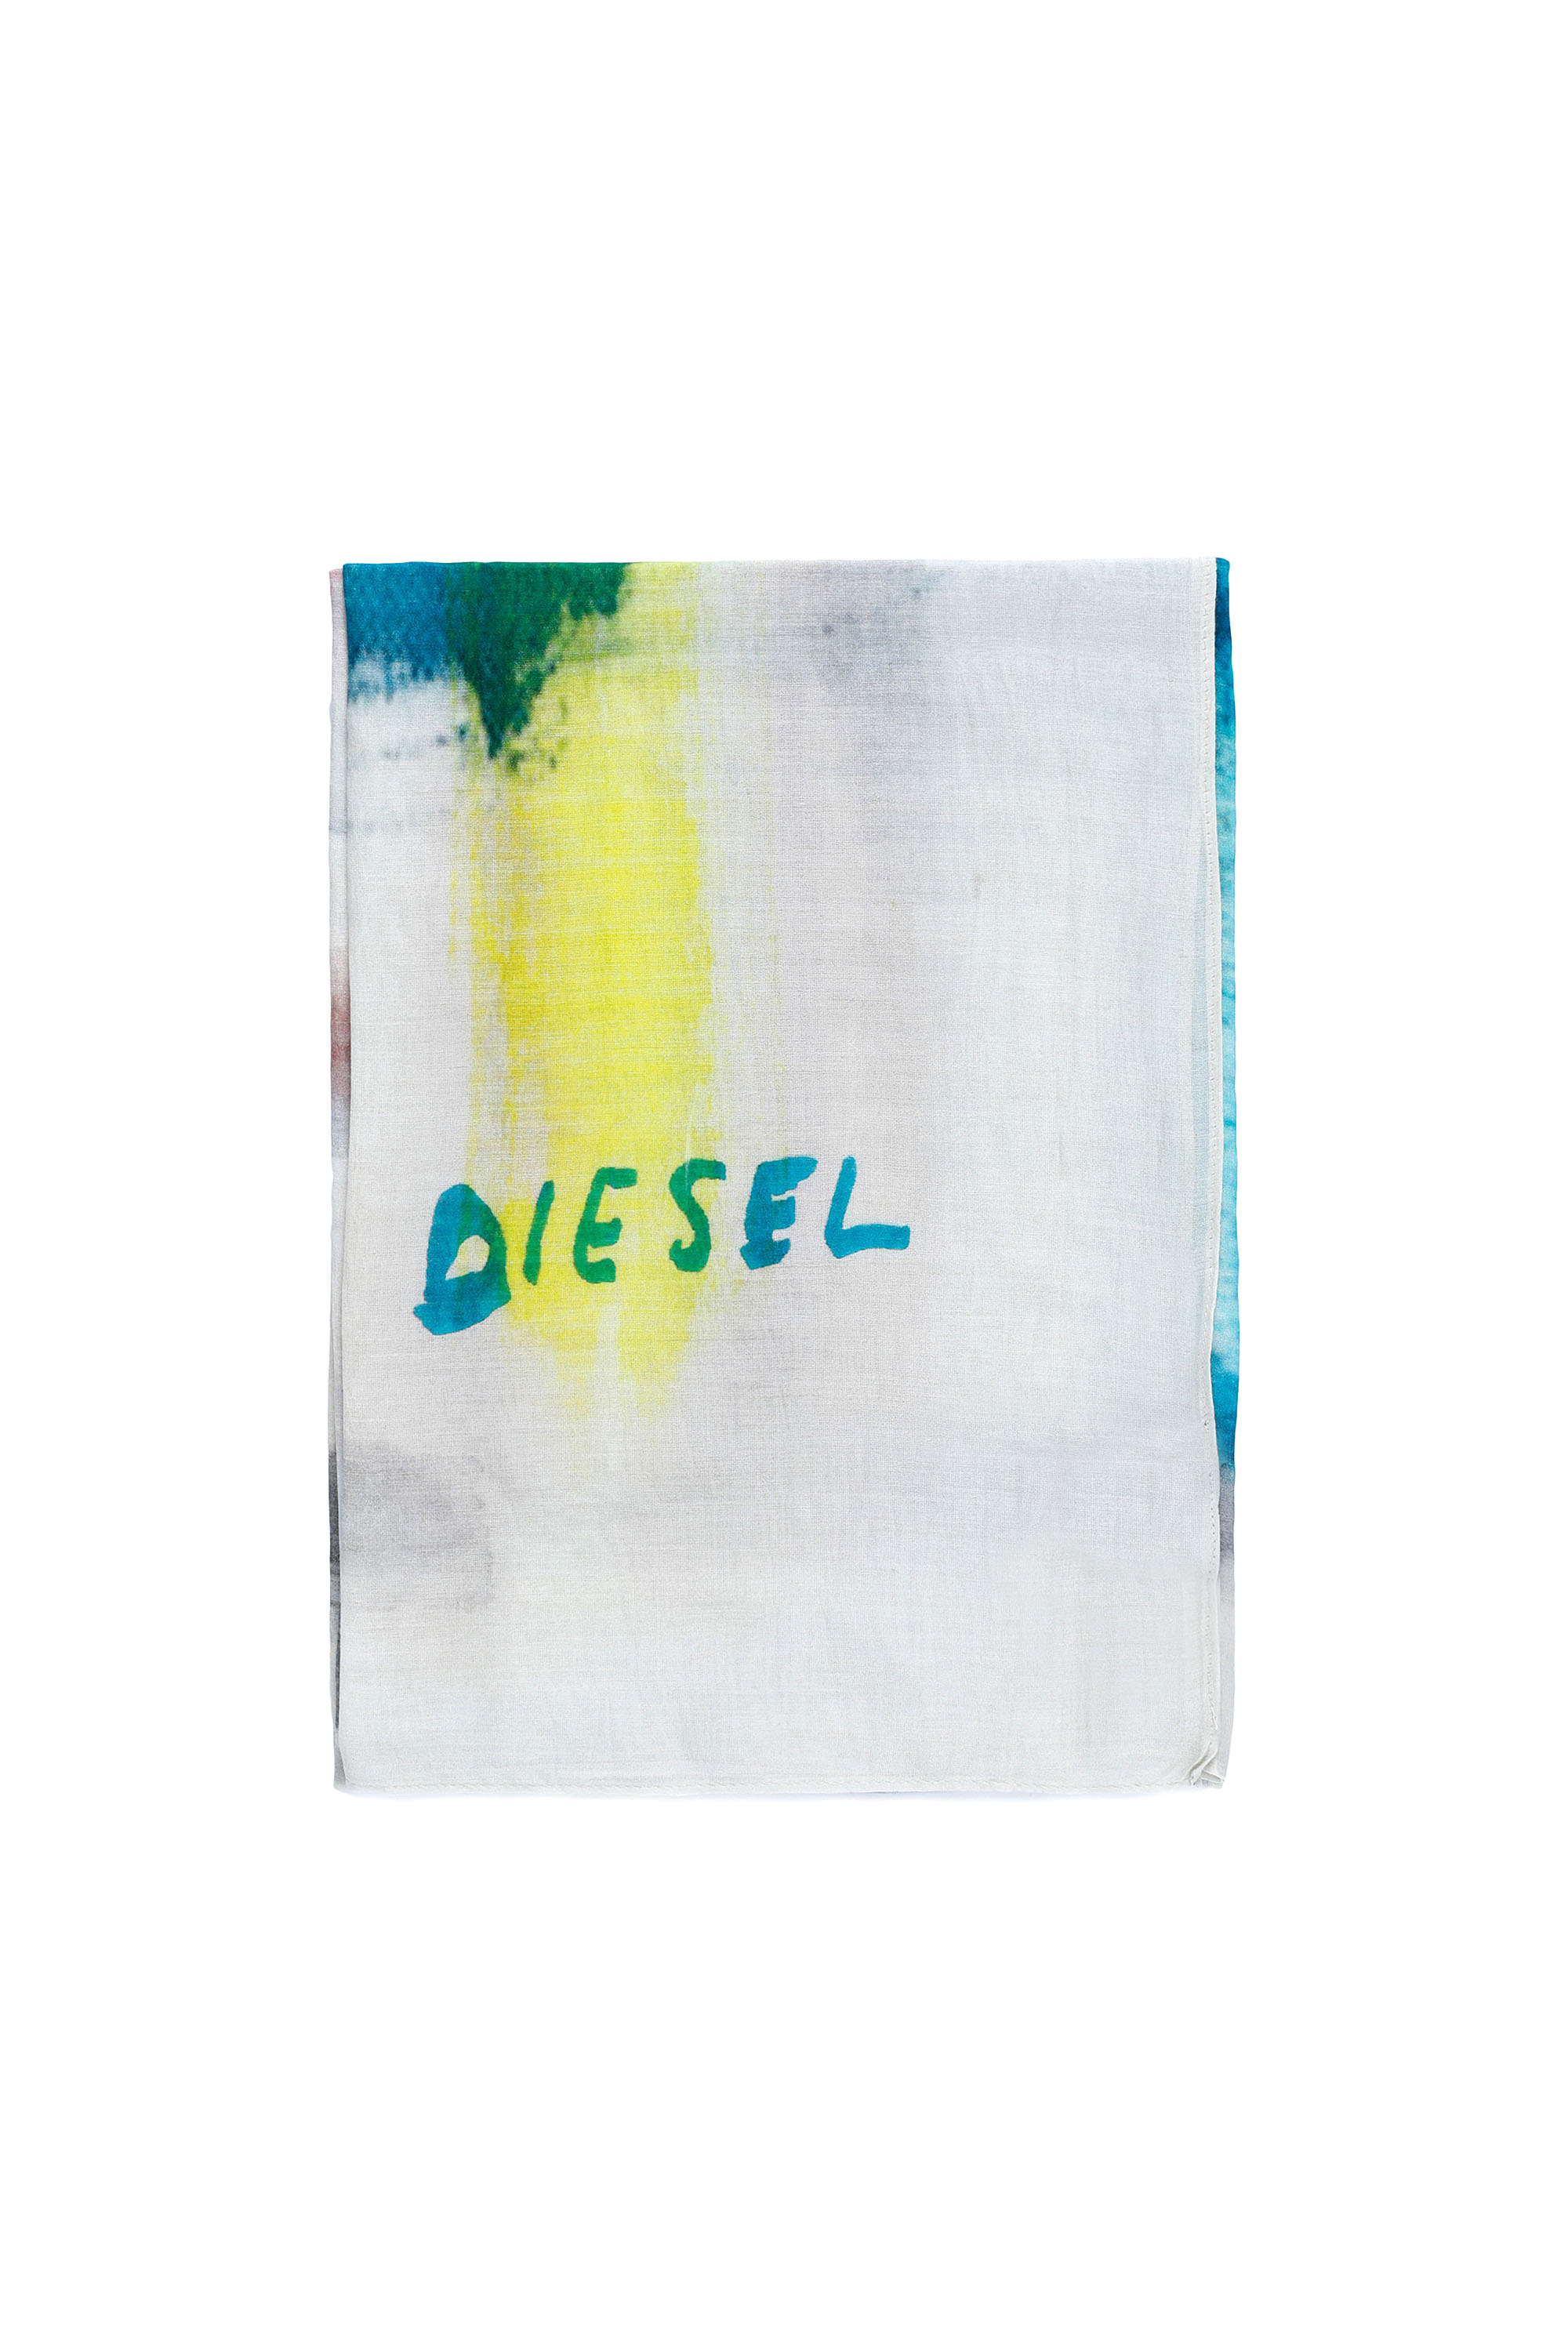 Diesel - S-JENS, White - Image 1